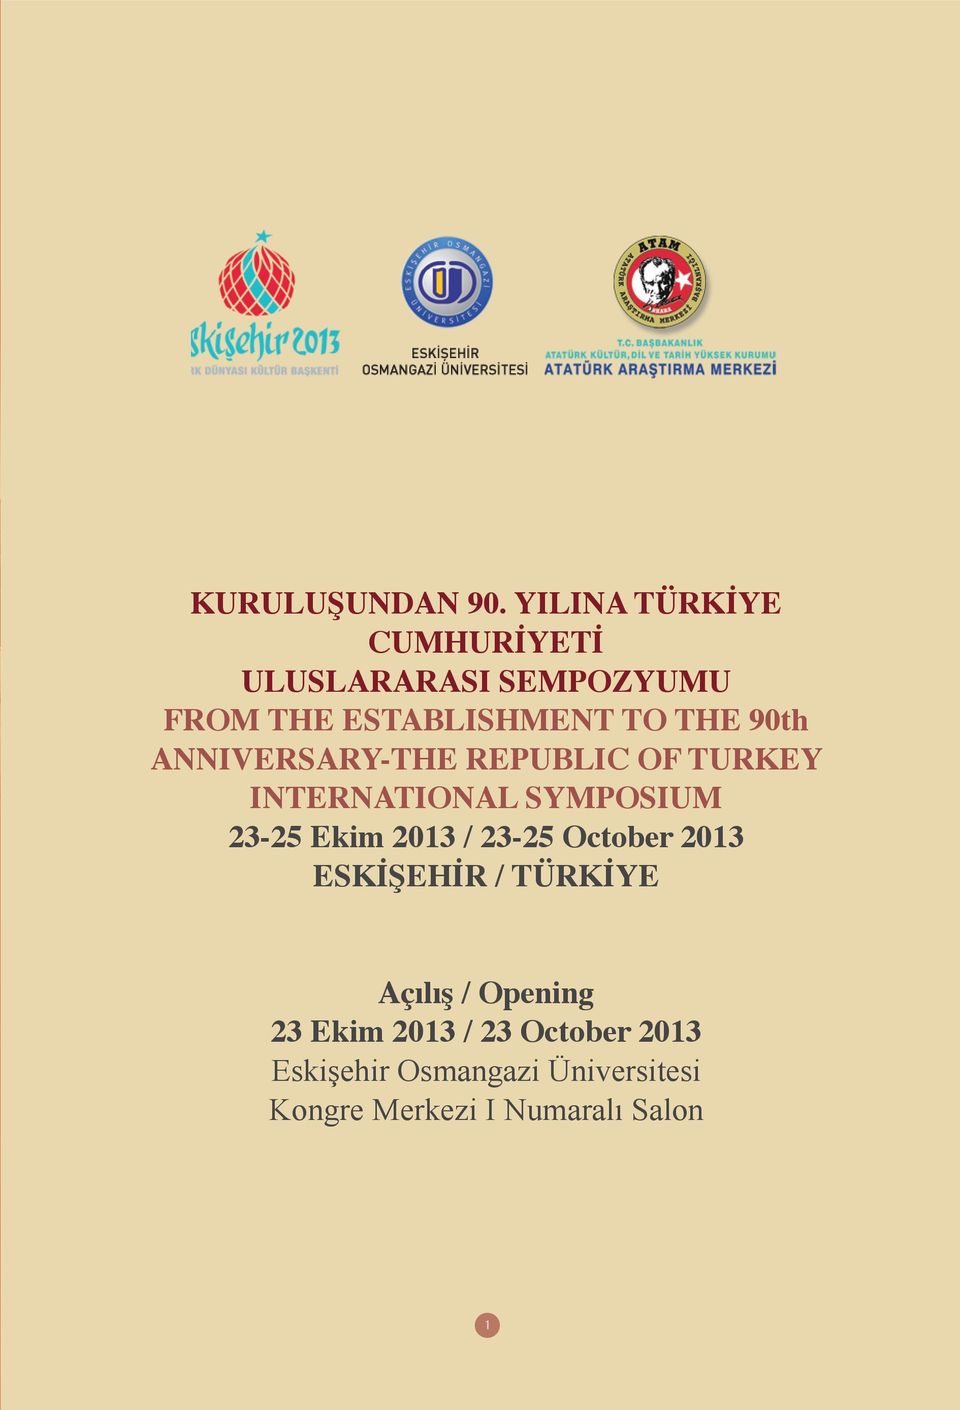 REPUBLIC OF TURKEY INTERNATIONAL SYMPOSIUM 23-25 Ekim 2013 / 23-25 October